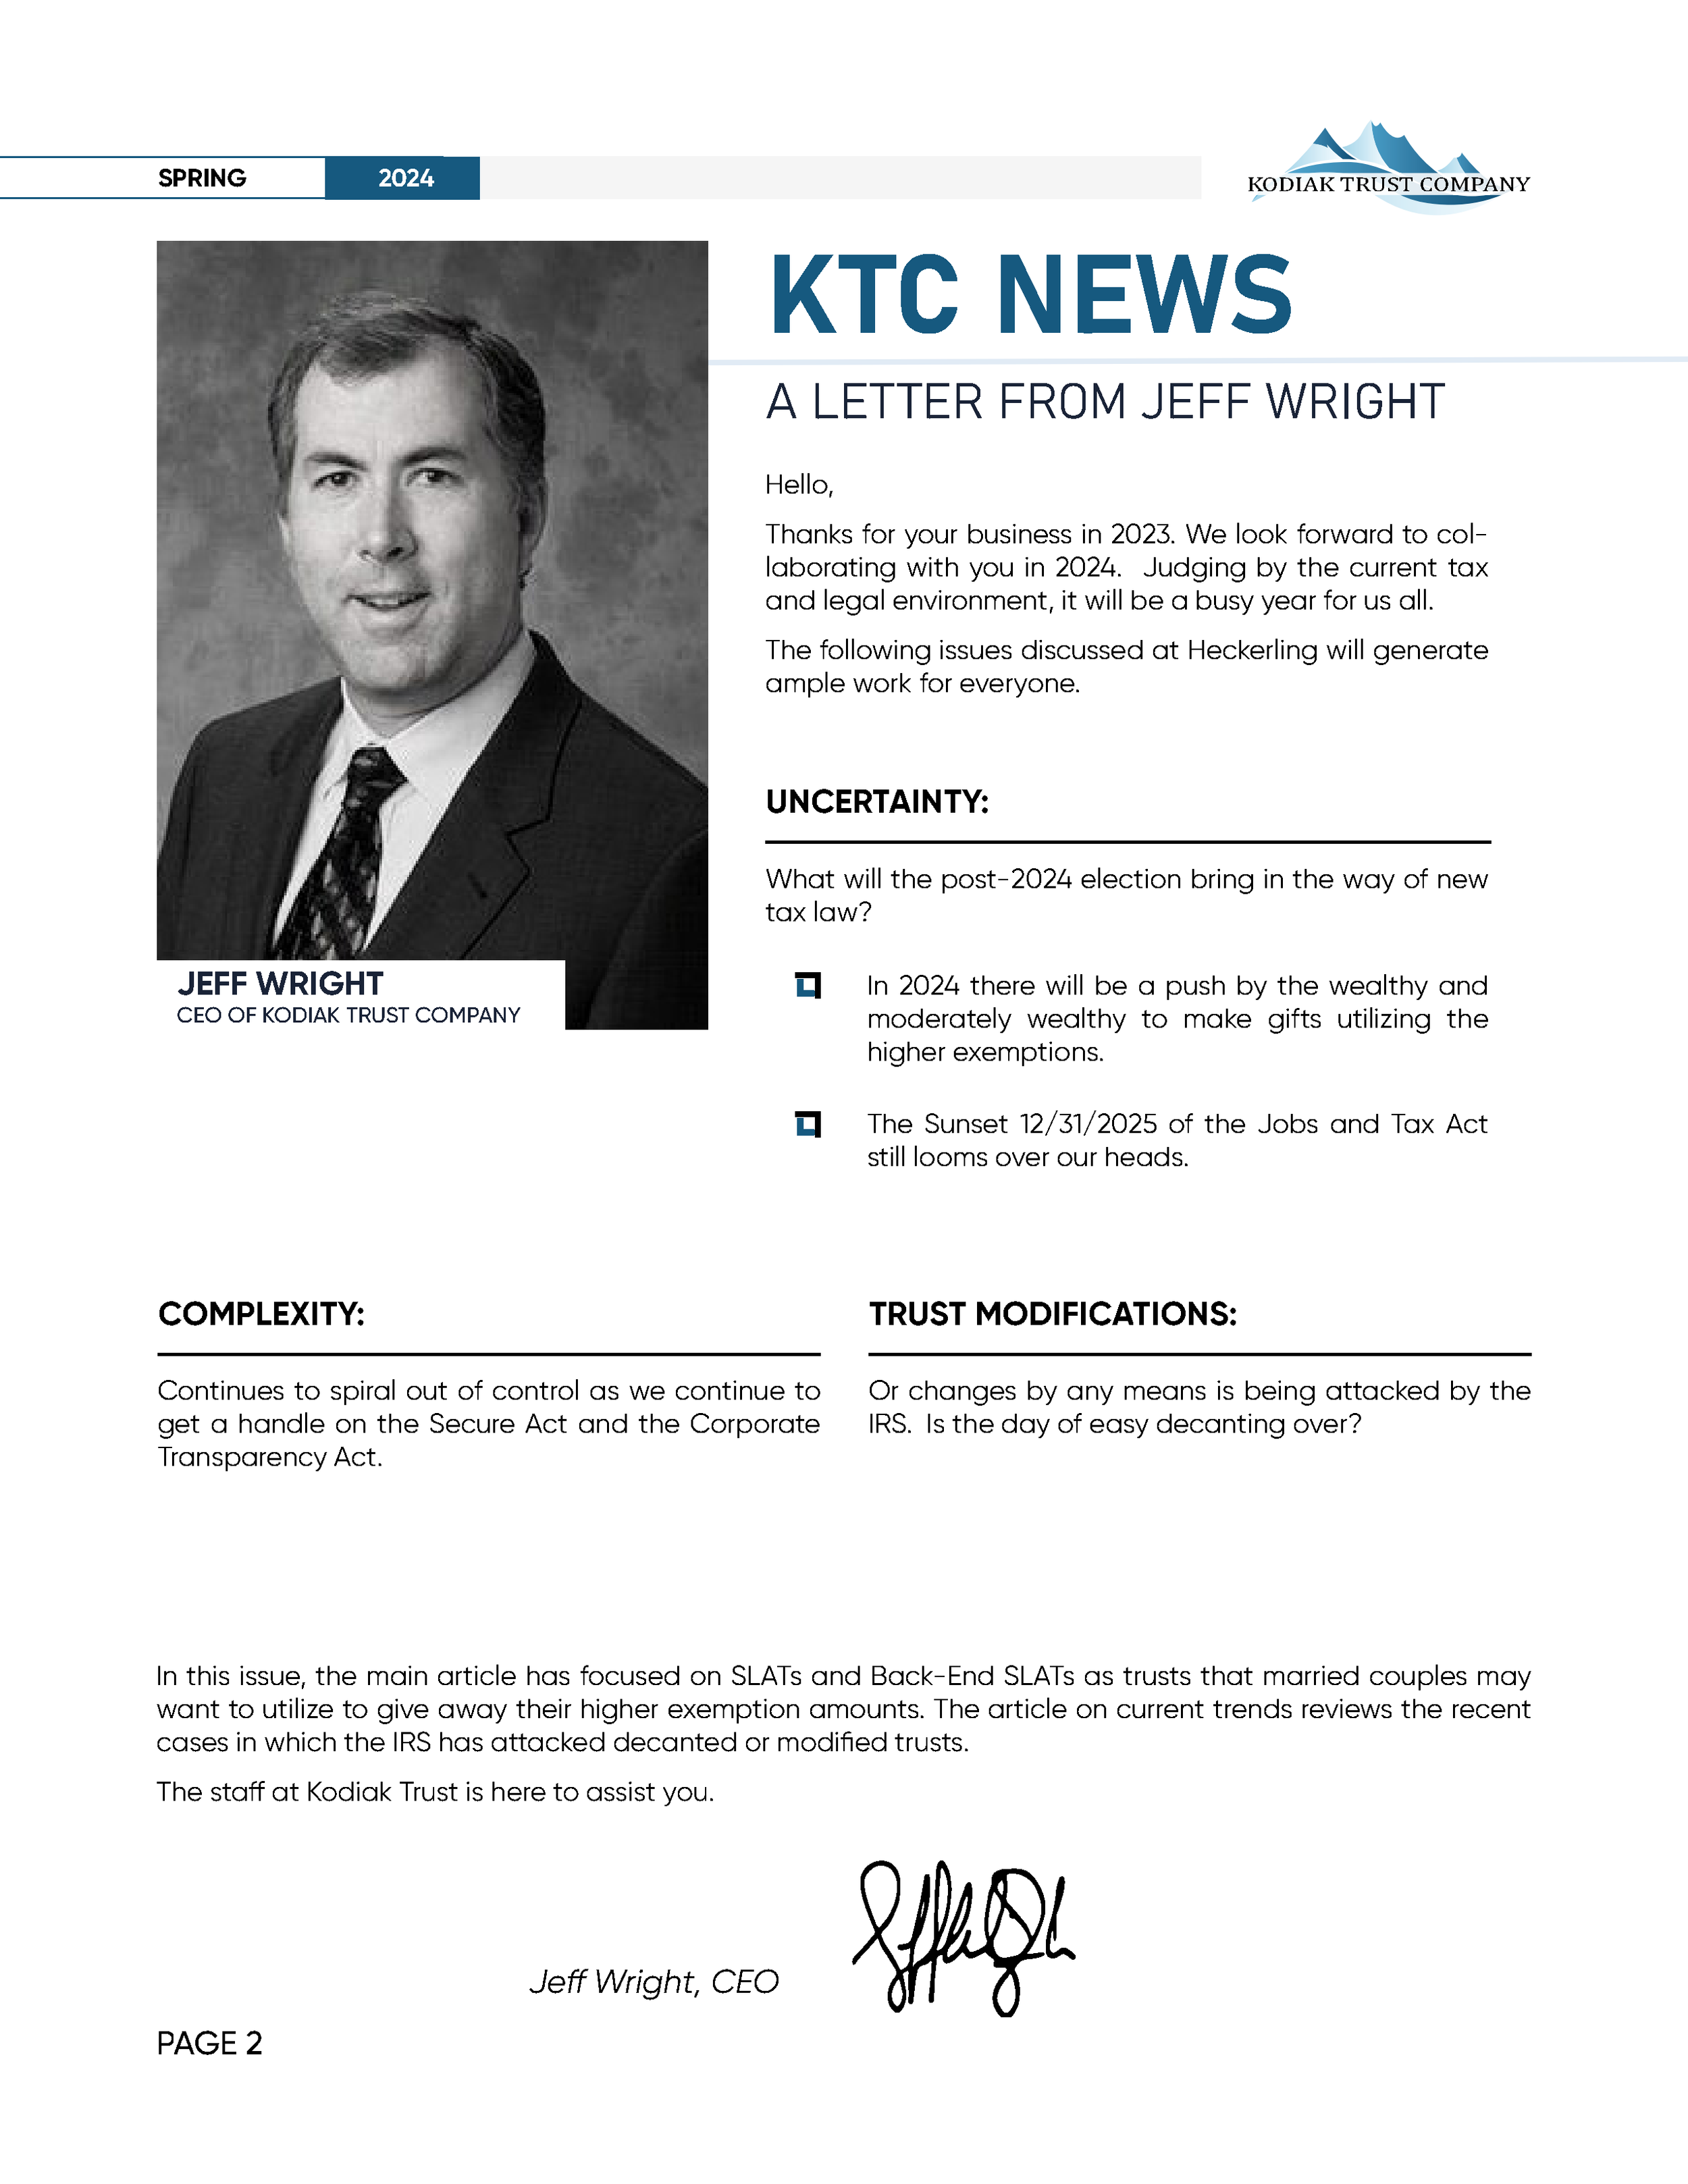 KTC QUARTERLY NEWSLETTER SPRING 2024_Page2.png